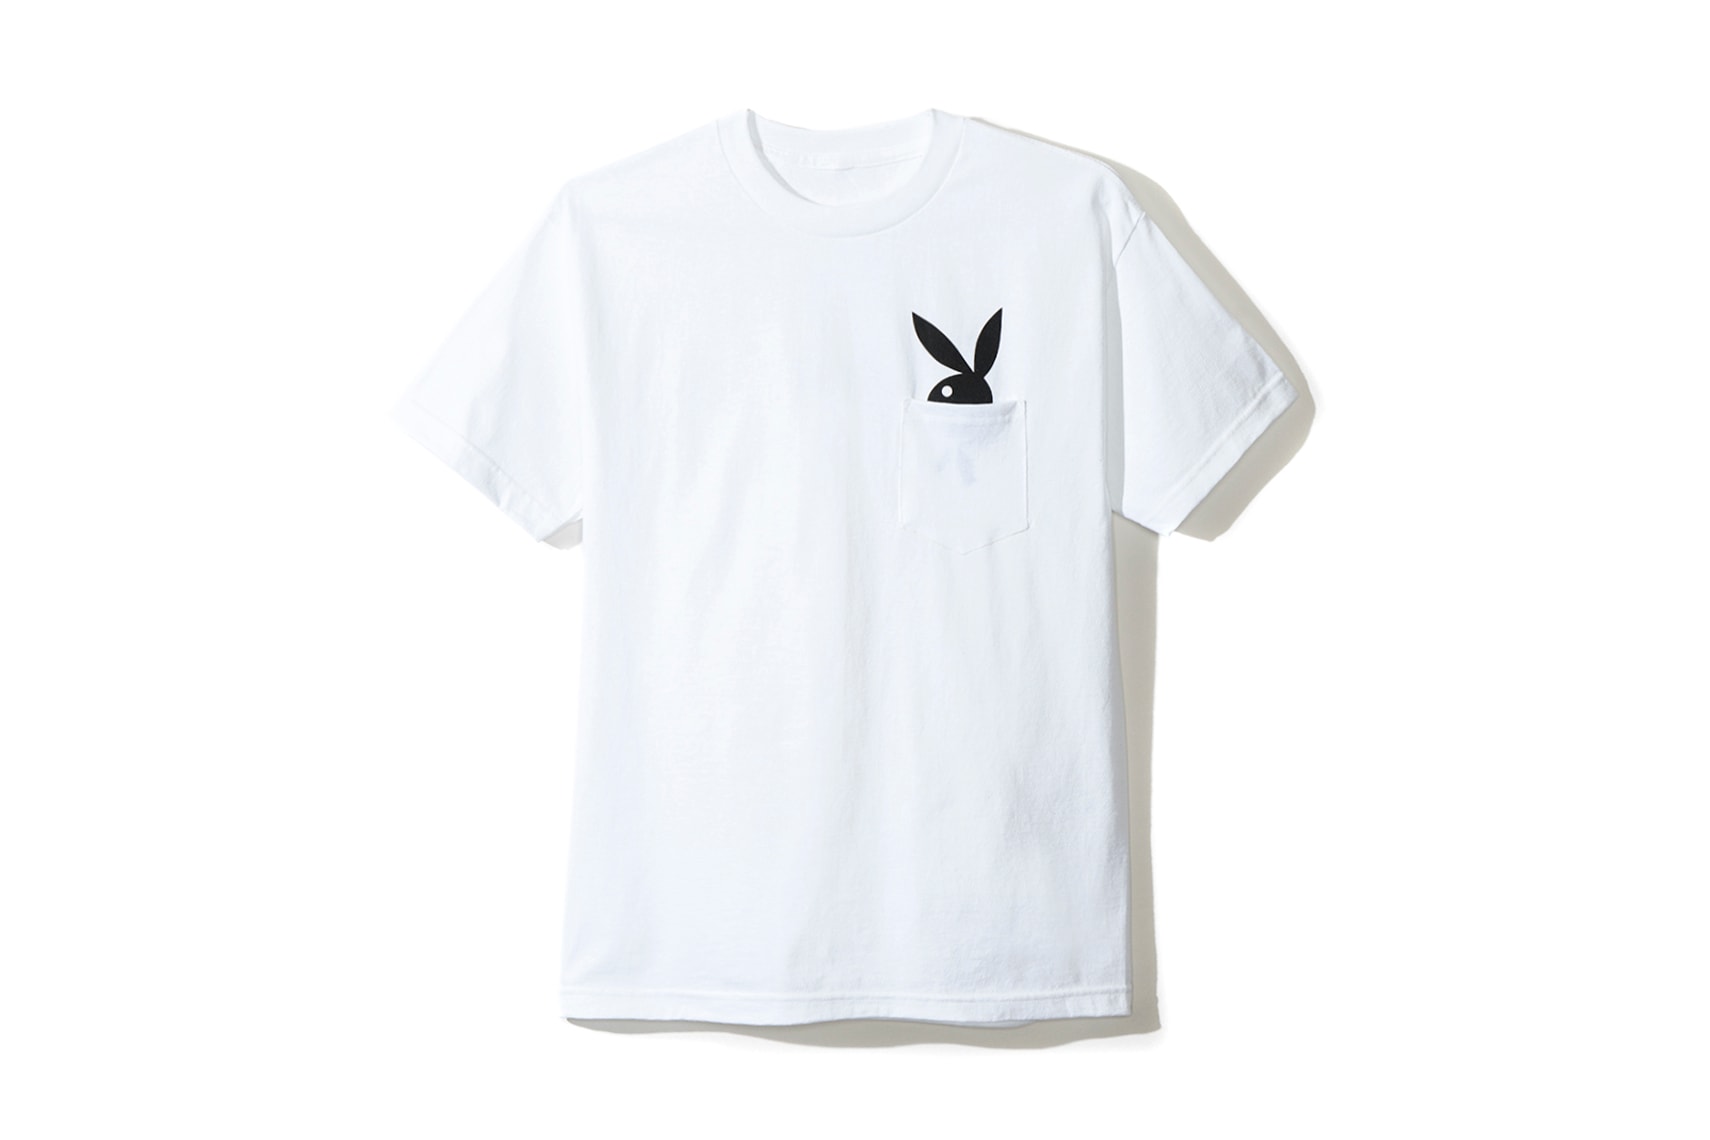 playboy white label anti social social club collaboration collection july 13 2018 white tee shirt pocket bunny rabbit head logo